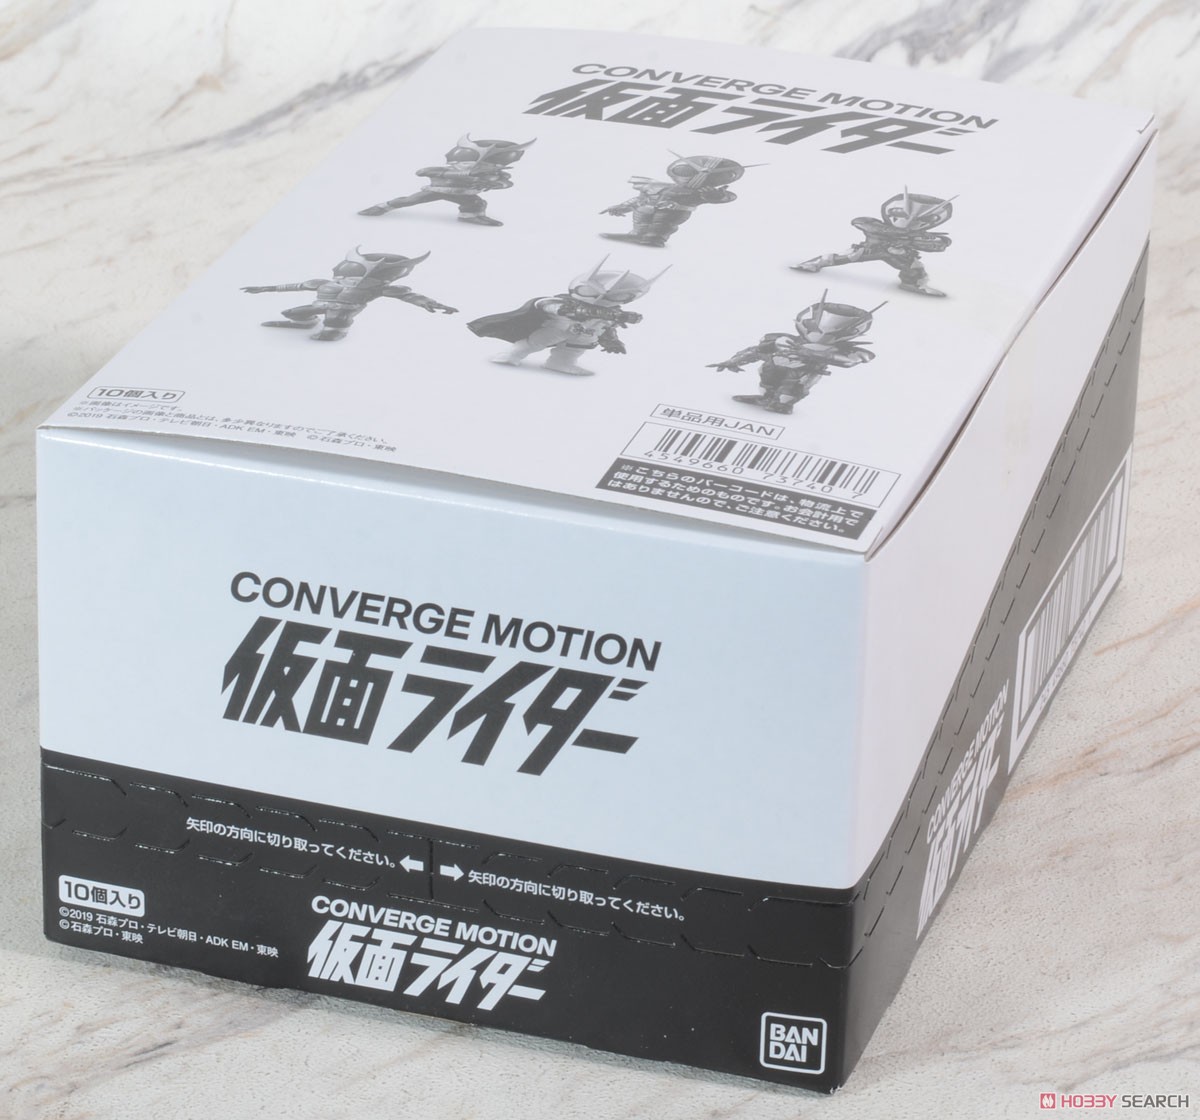 CONVERGE MOTION 仮面ライダー (10個セット) (食玩) パッケージ1